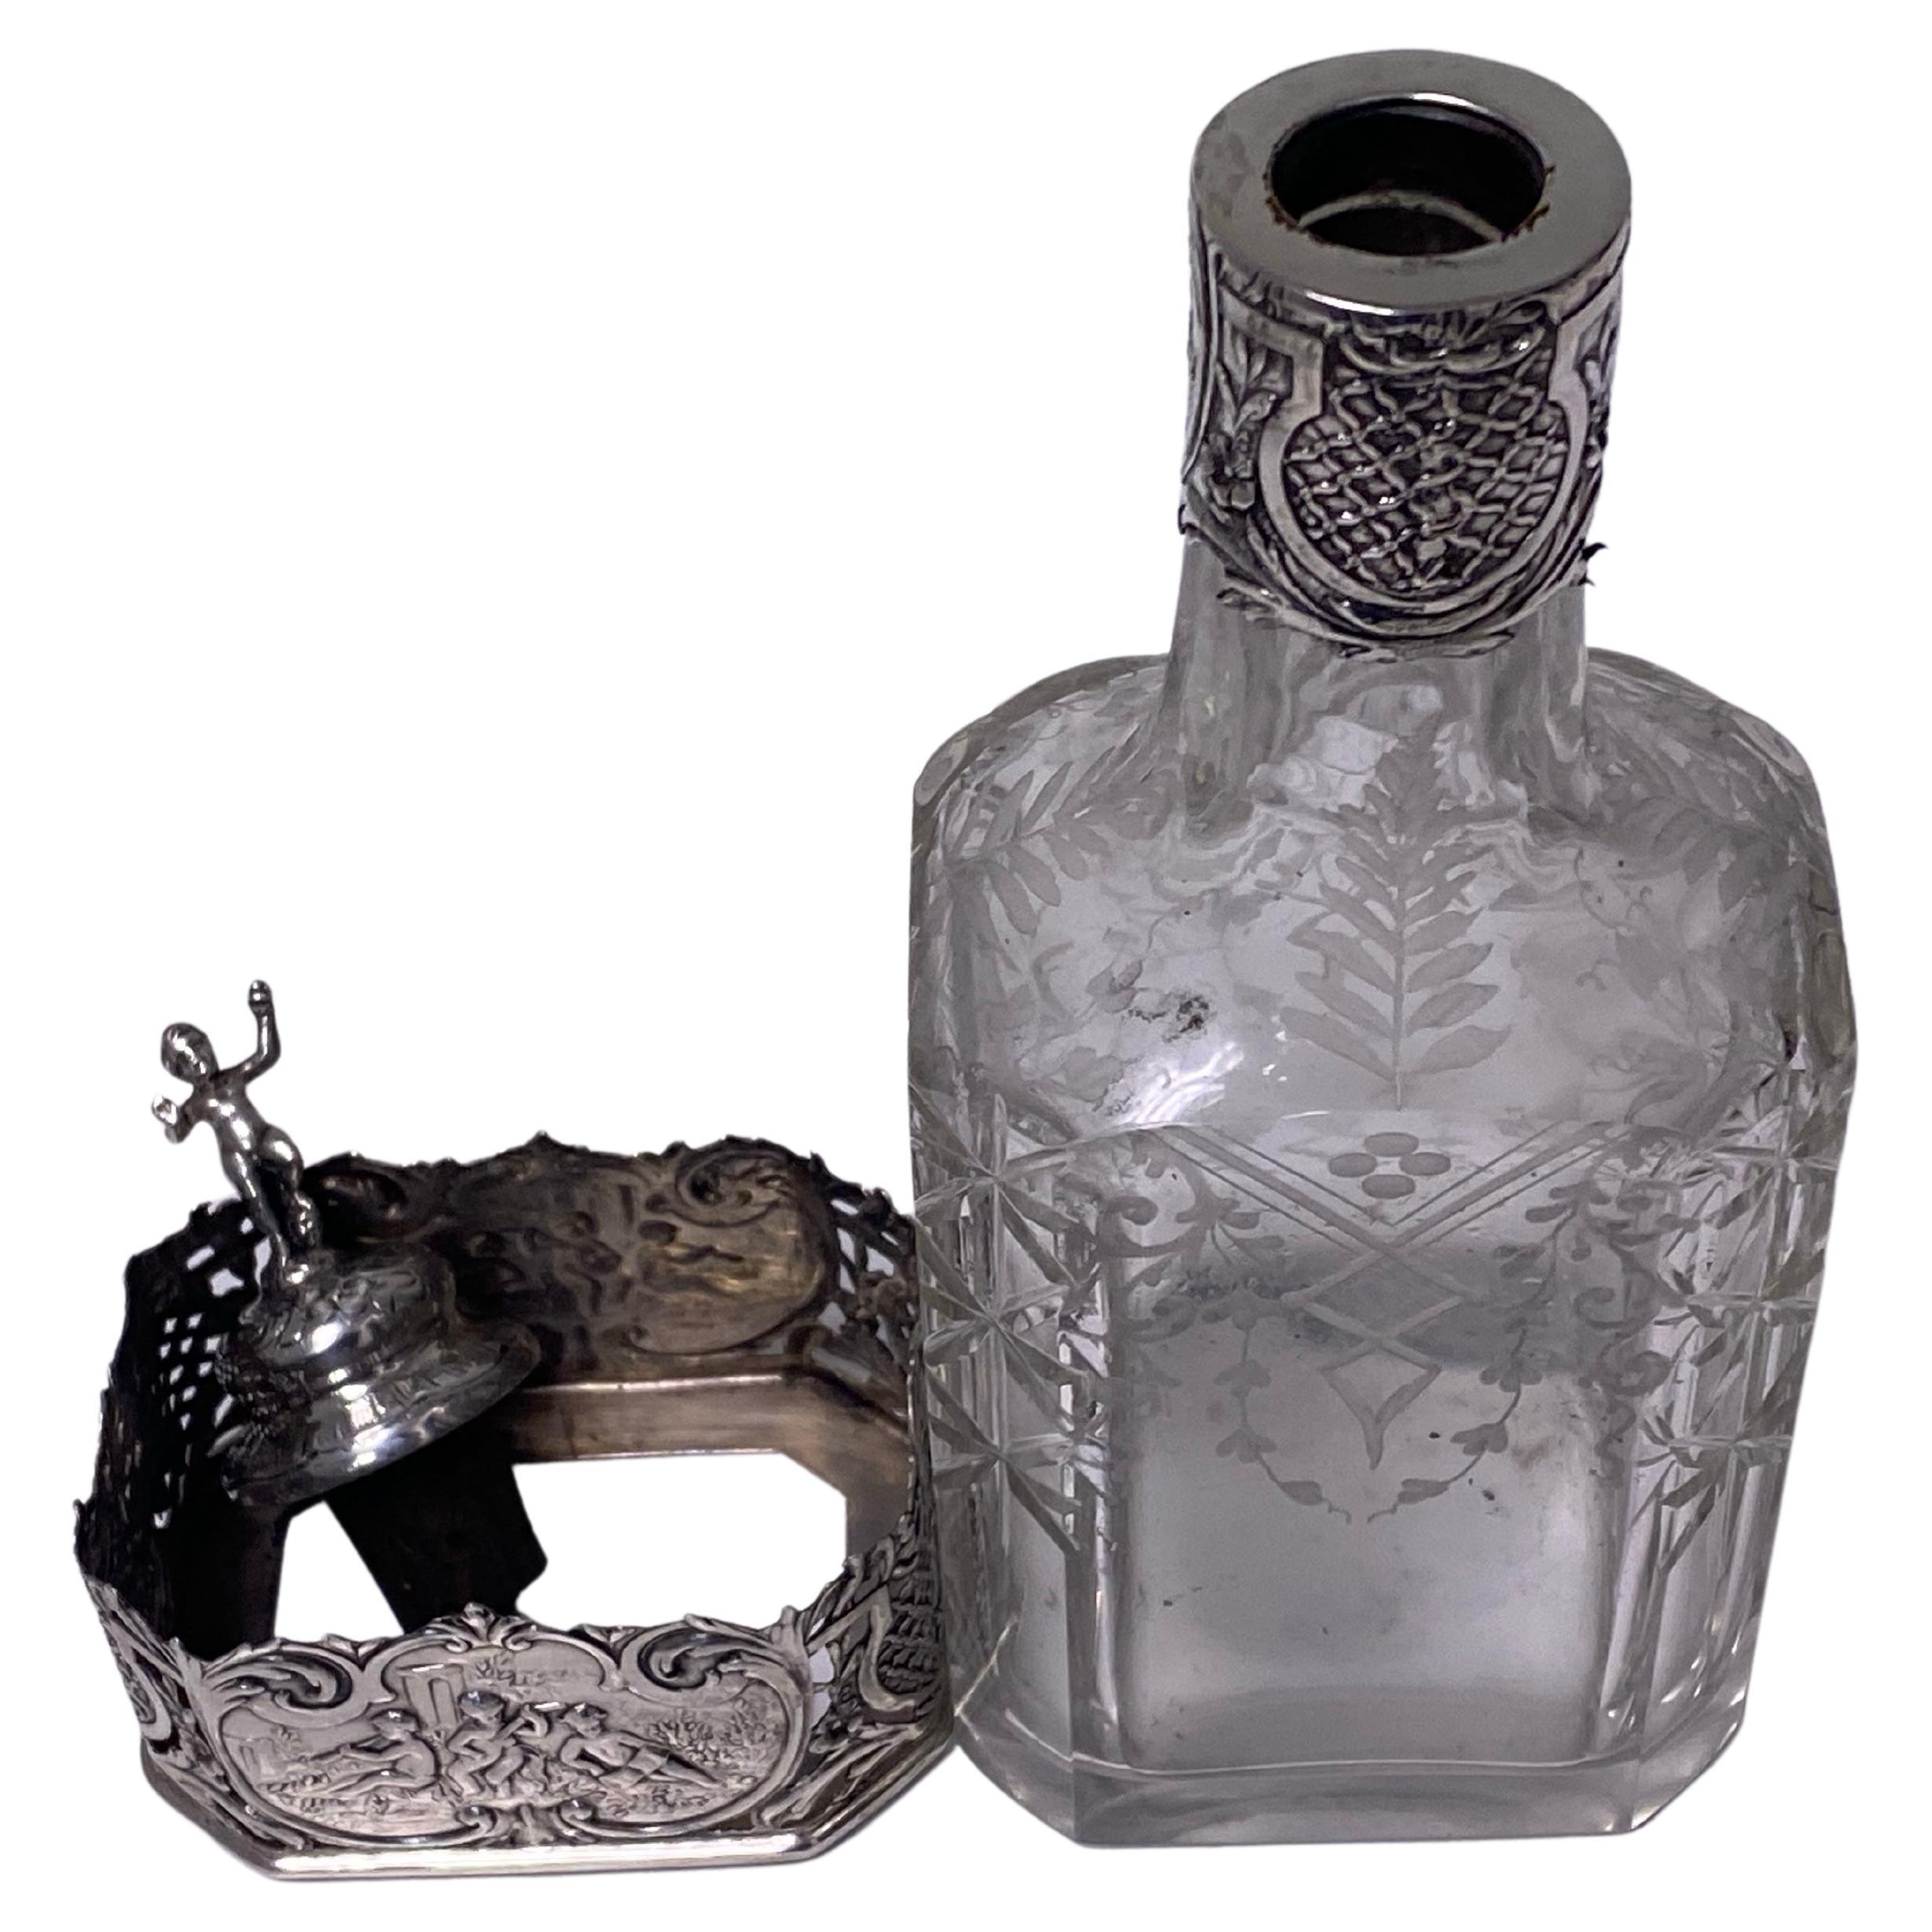 19th Century Silver and Glass Decanter for Oil Vinegar Hanau circa 1890 Storck and Sinsheimer